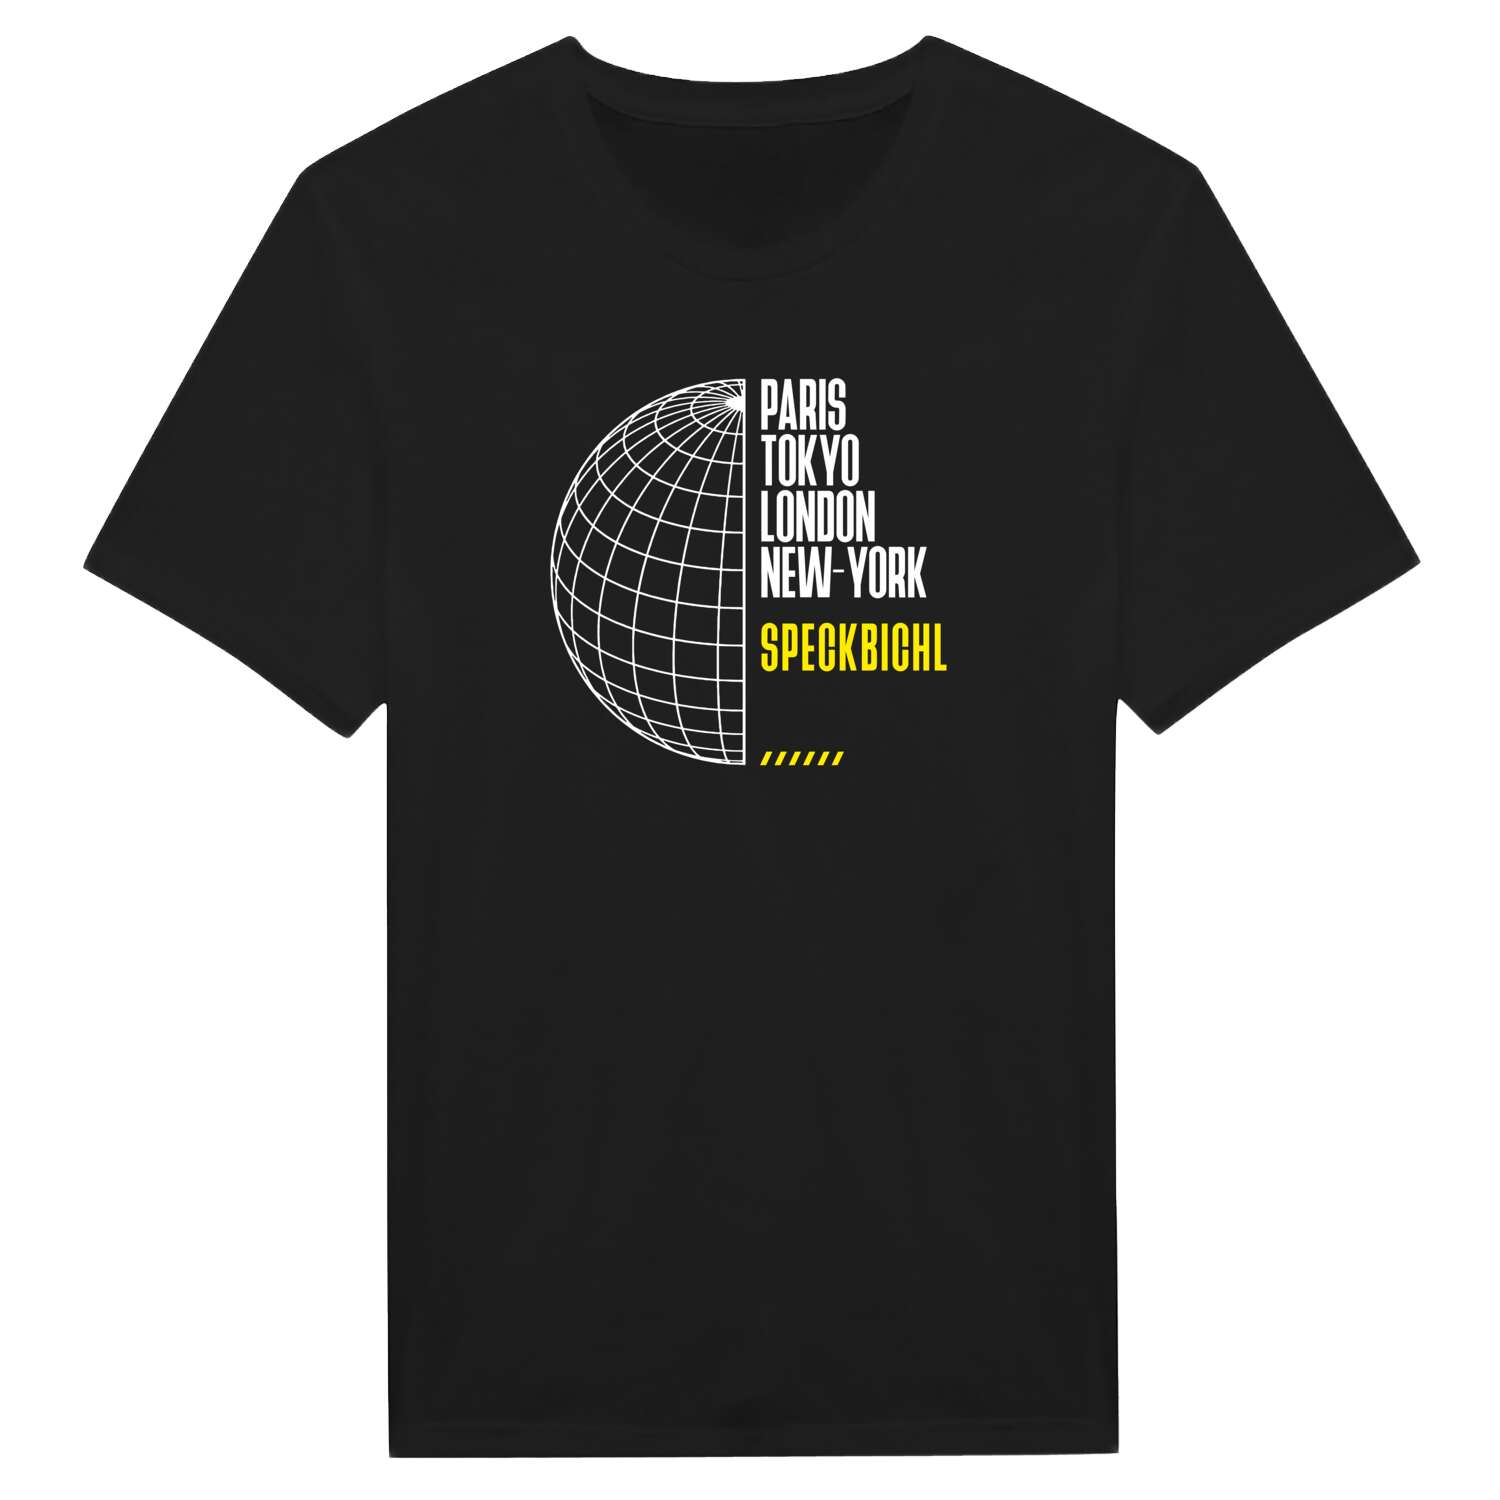 Speckbichl T-Shirt »Paris Tokyo London«